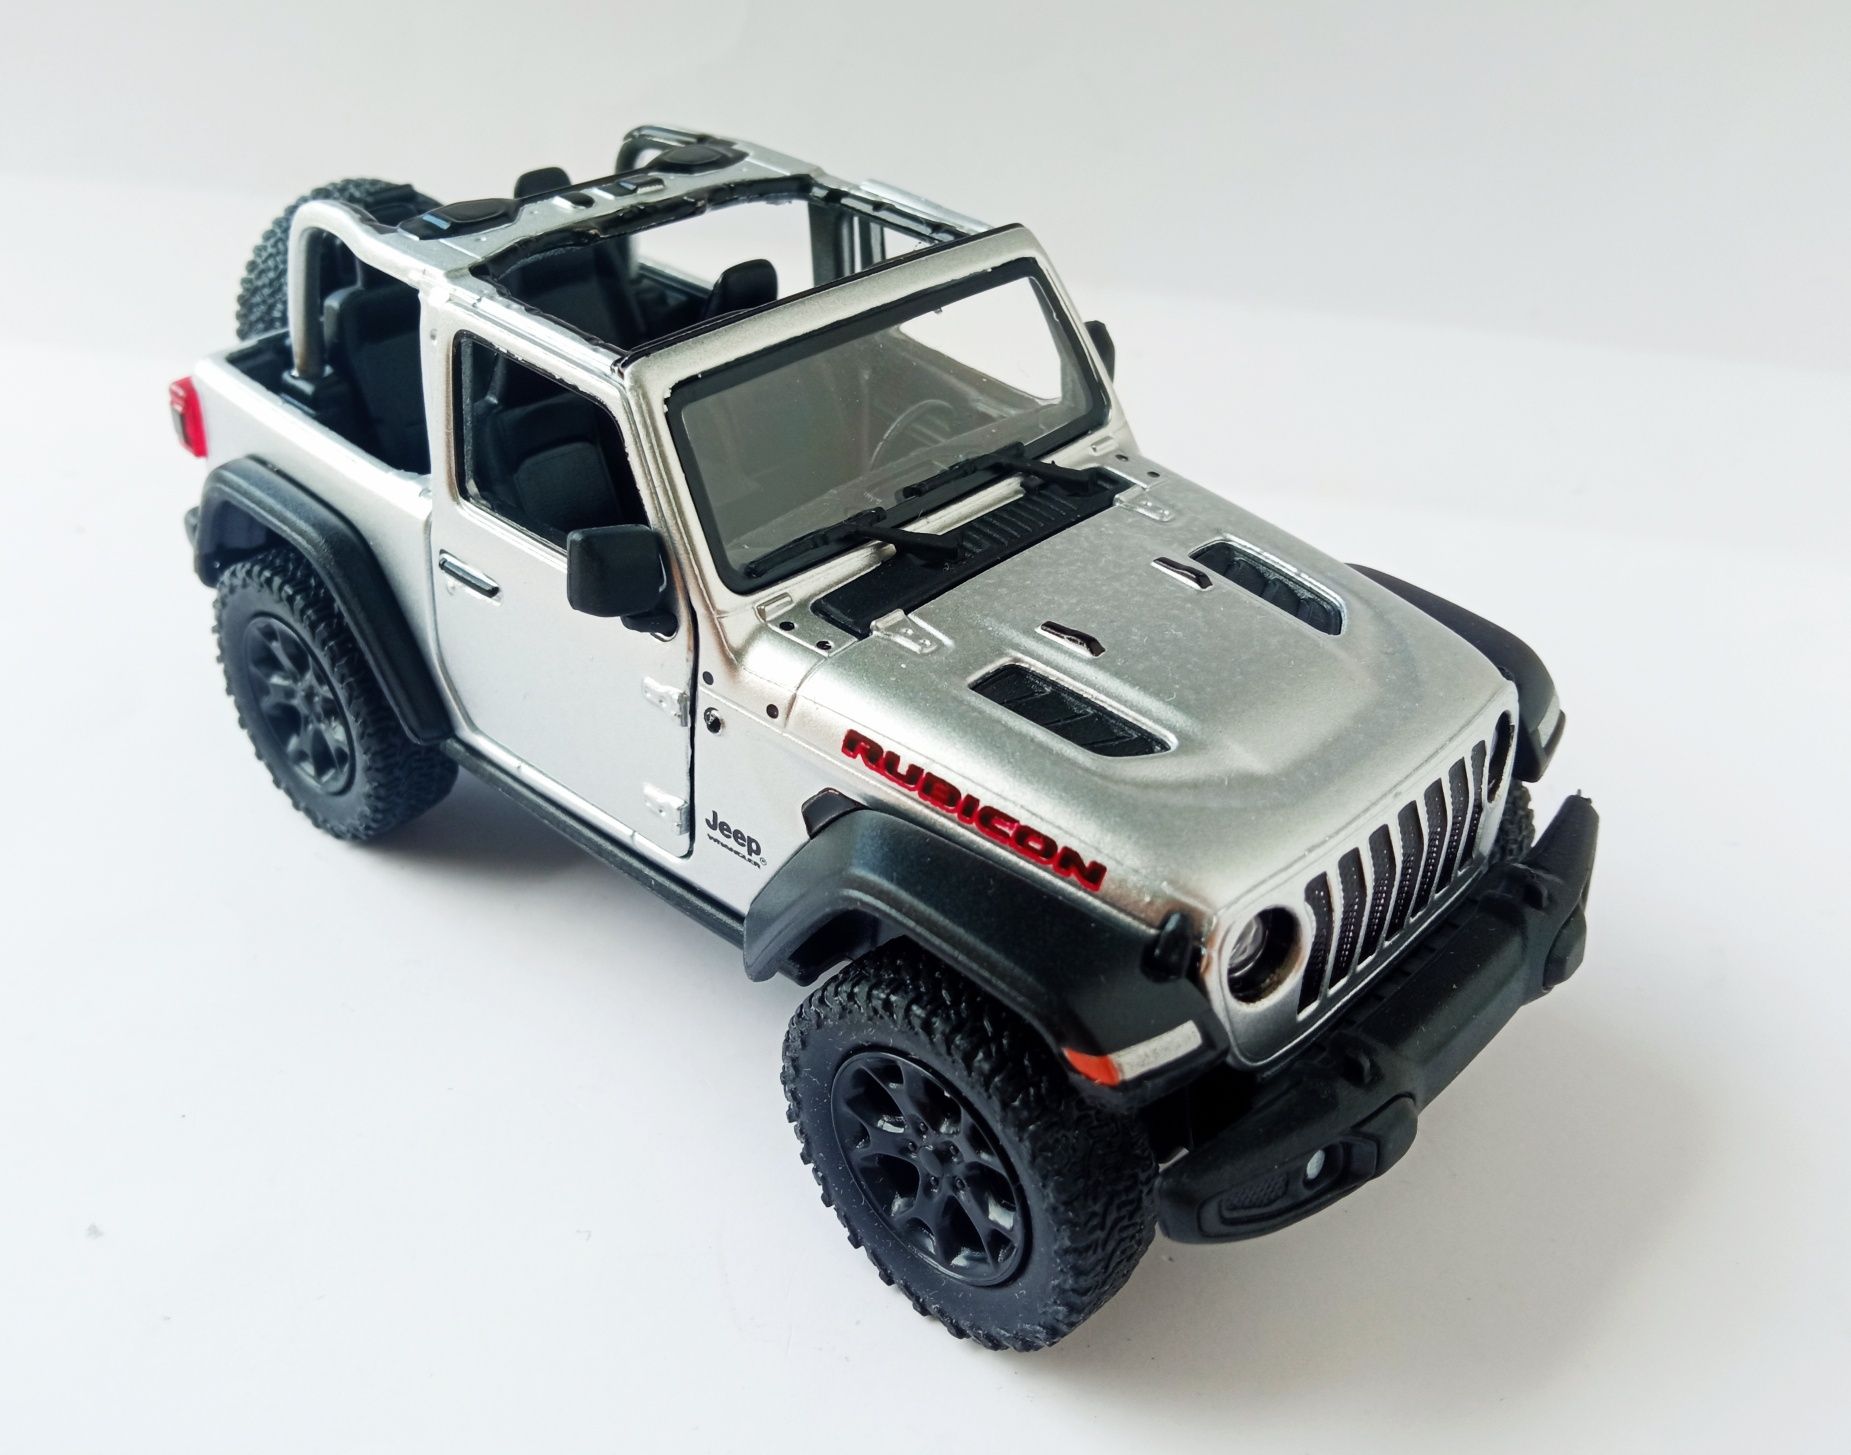 Jeep Wrangler Rubicon kinsmart die cast model